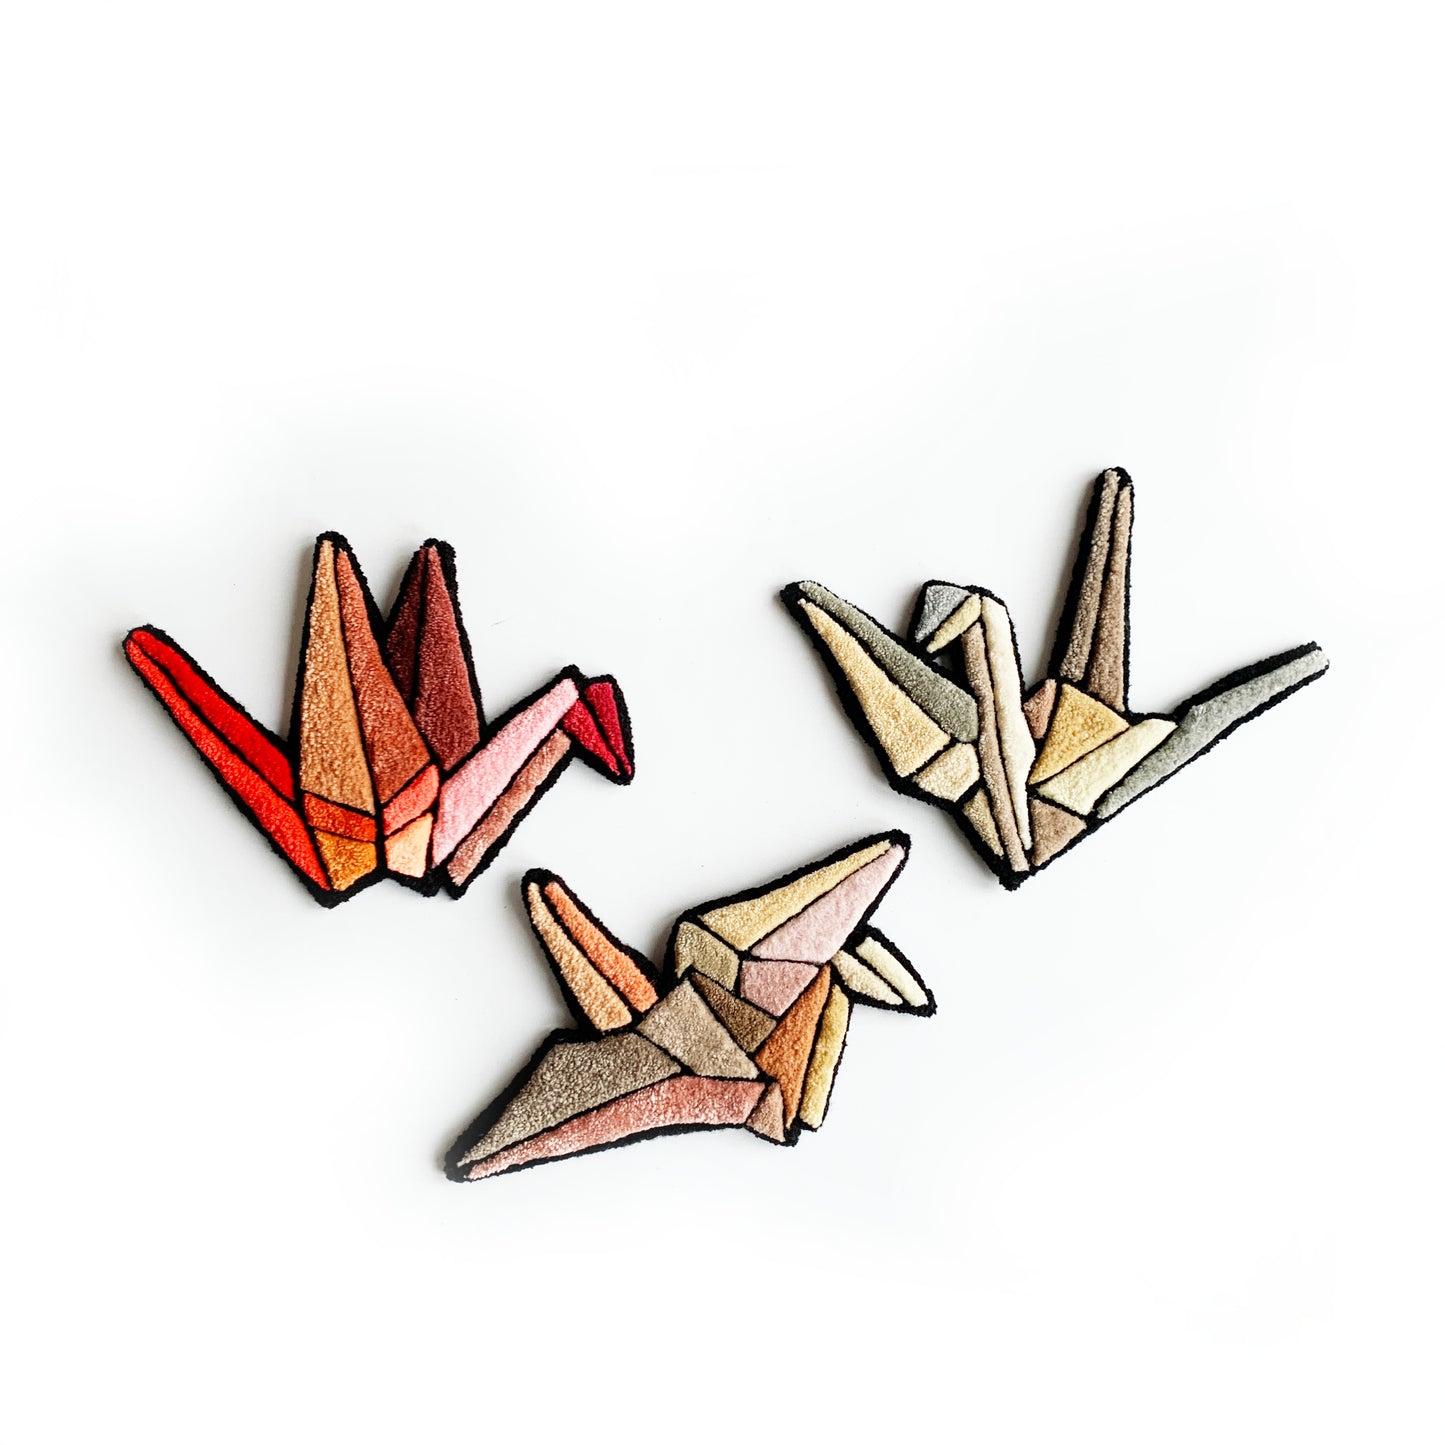 Origami crane grey tones